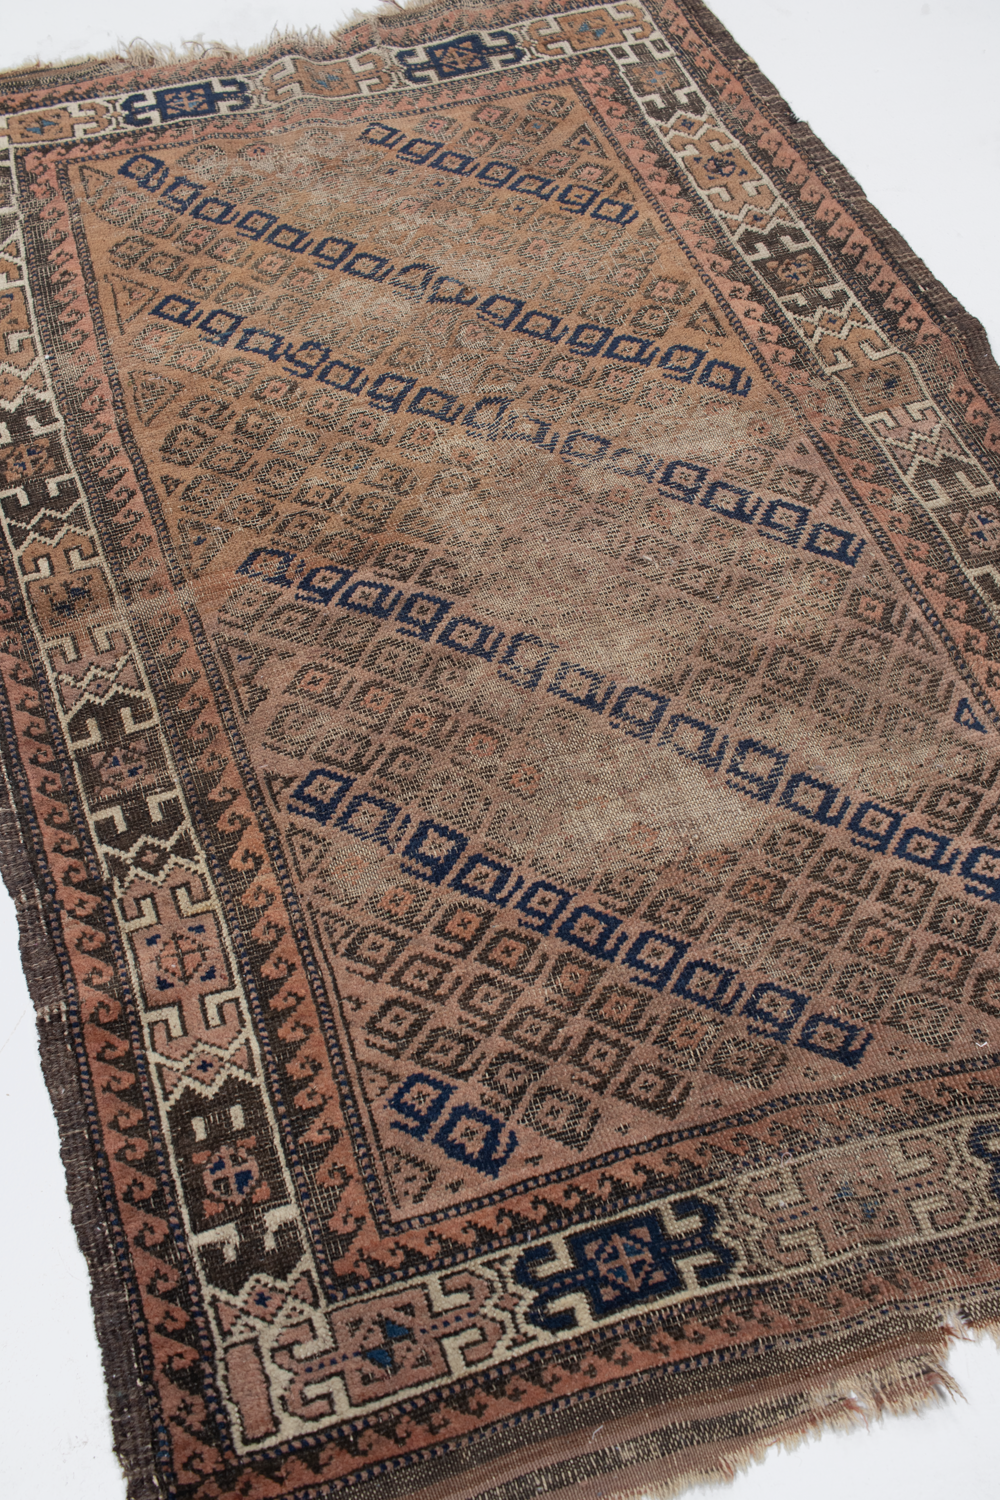 Antique Persian Baluch Rug